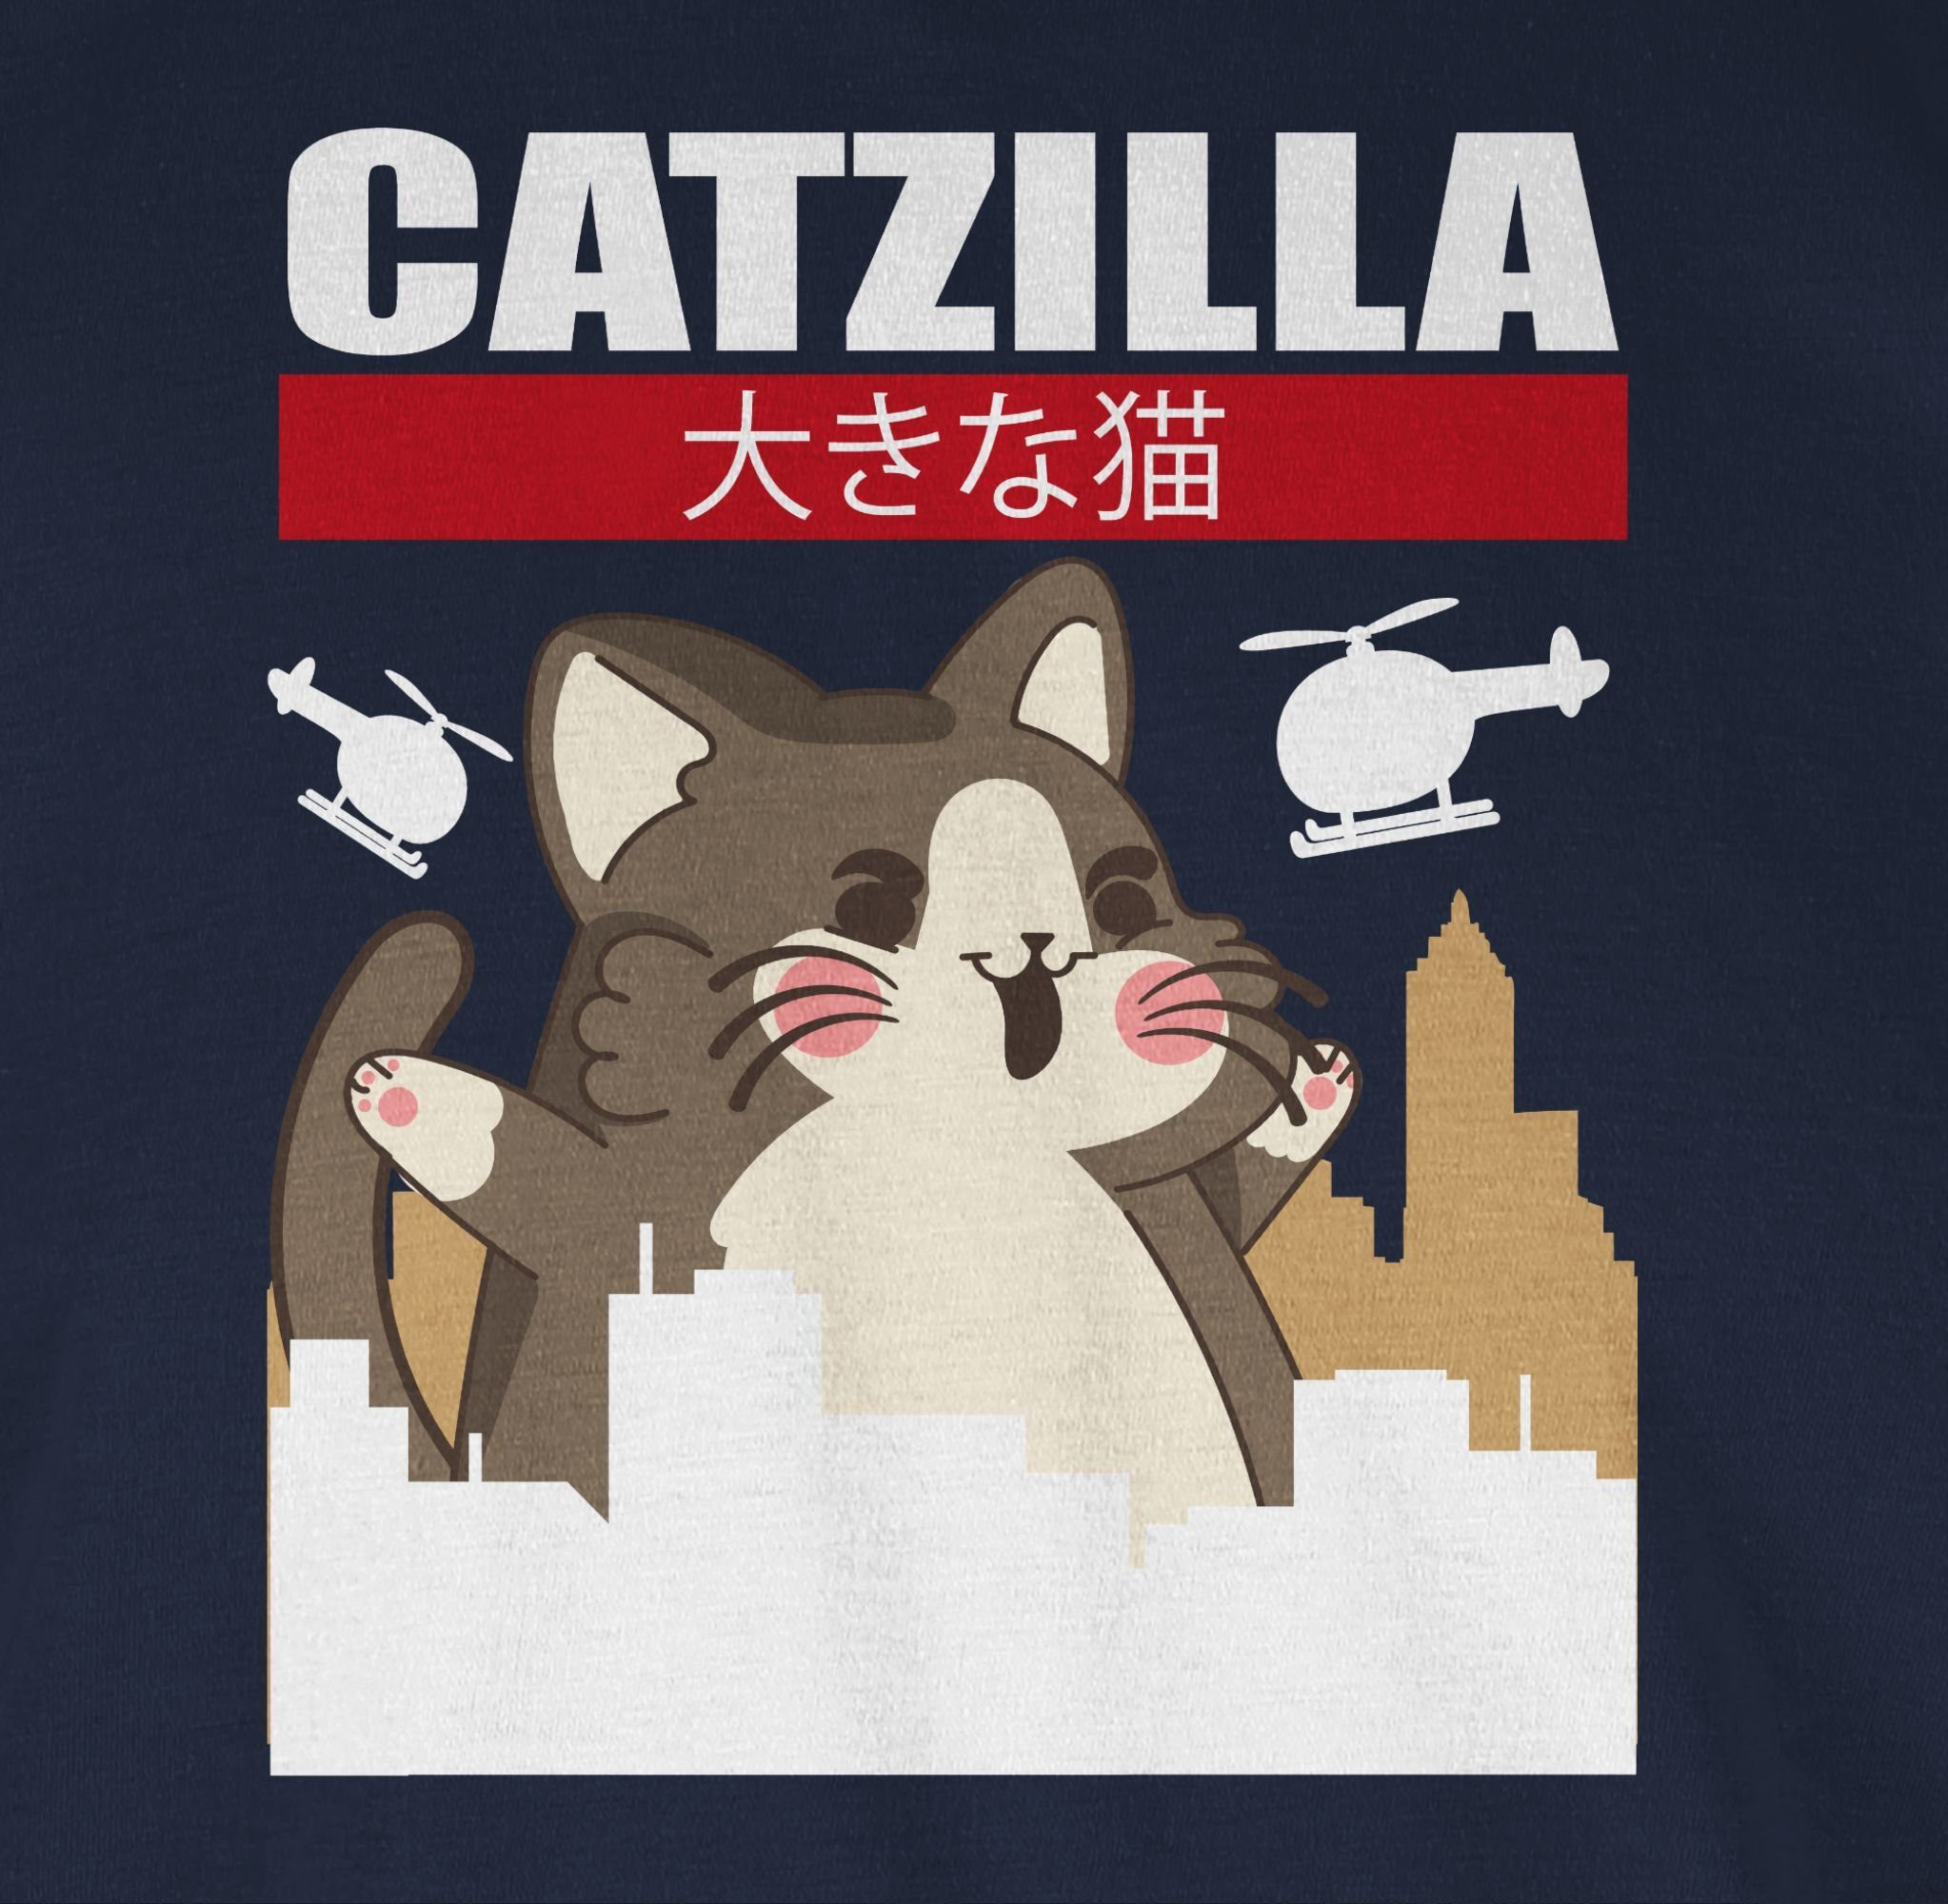 - Anime Shirtracer Geschenke Blau Cat 2 Catzilla Big T-Shirt Navy